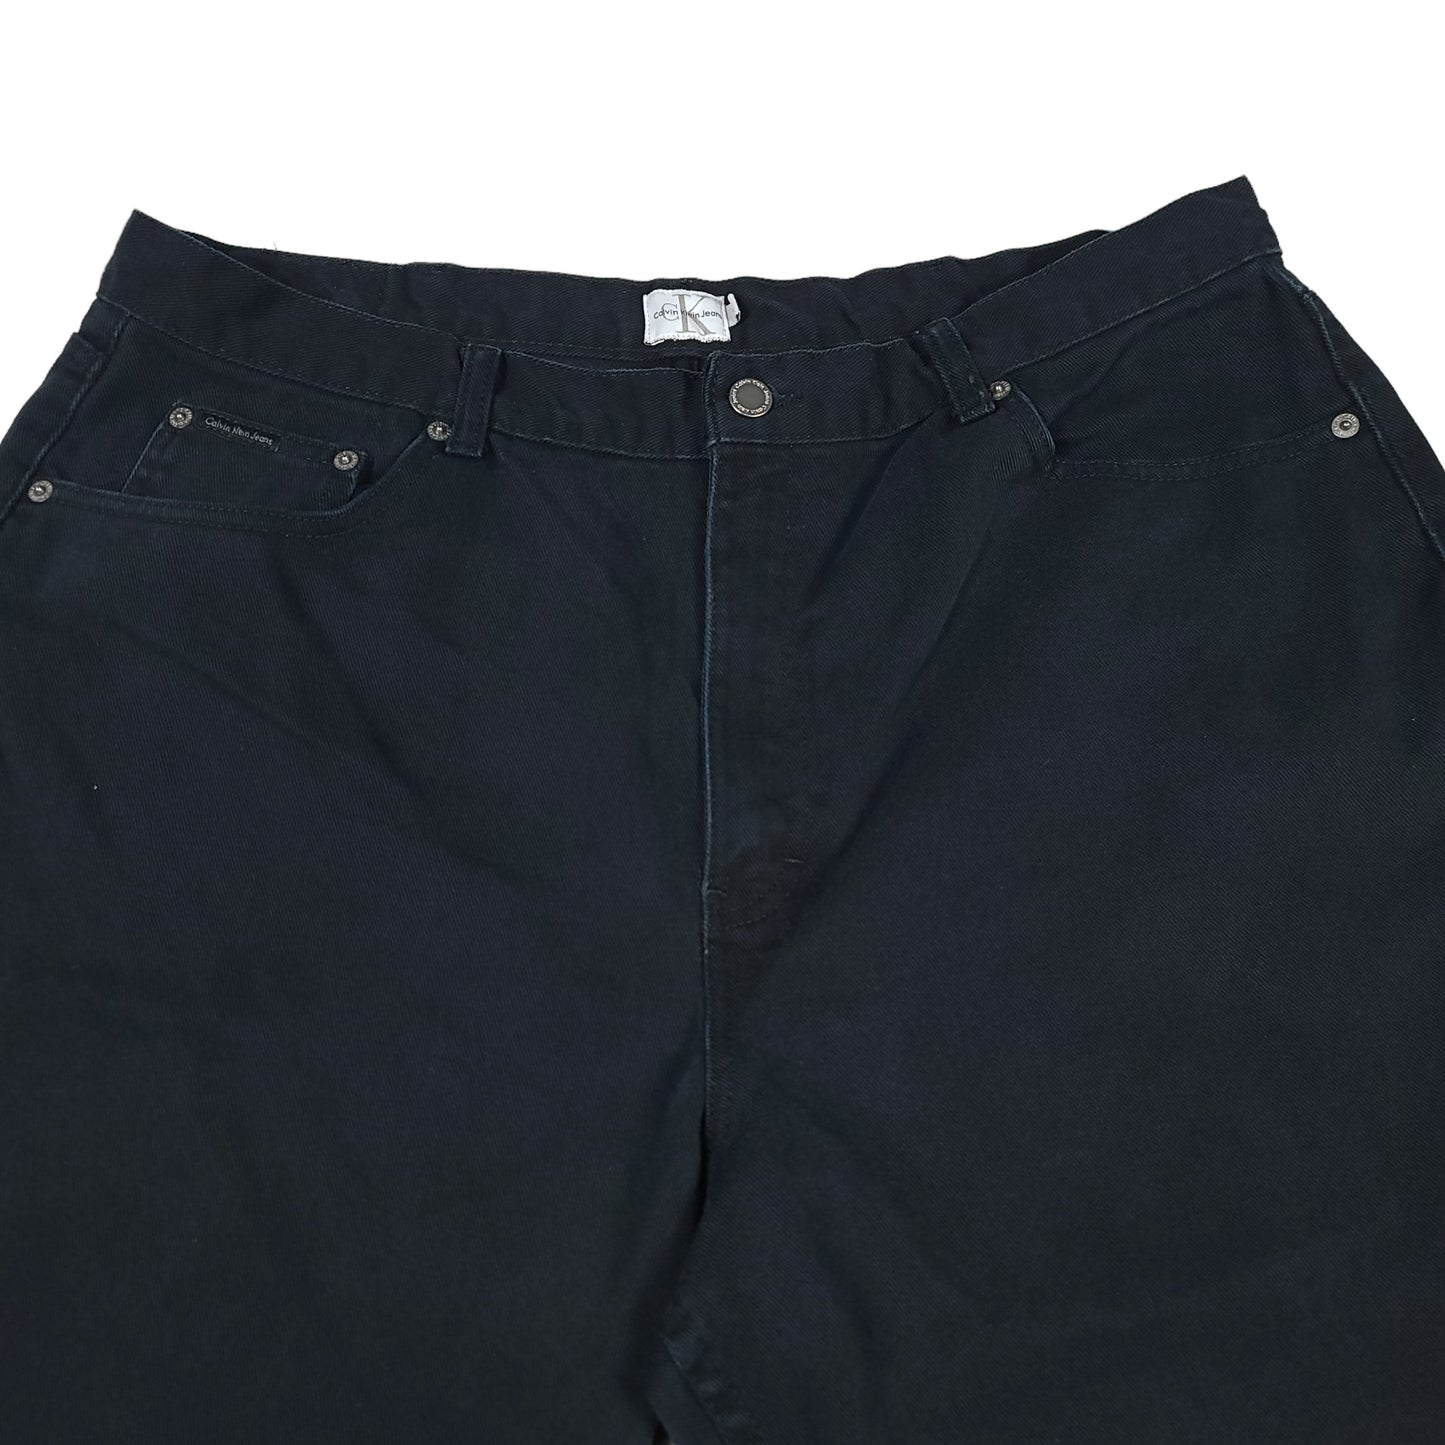 Calvin Klein Black Denim Pants